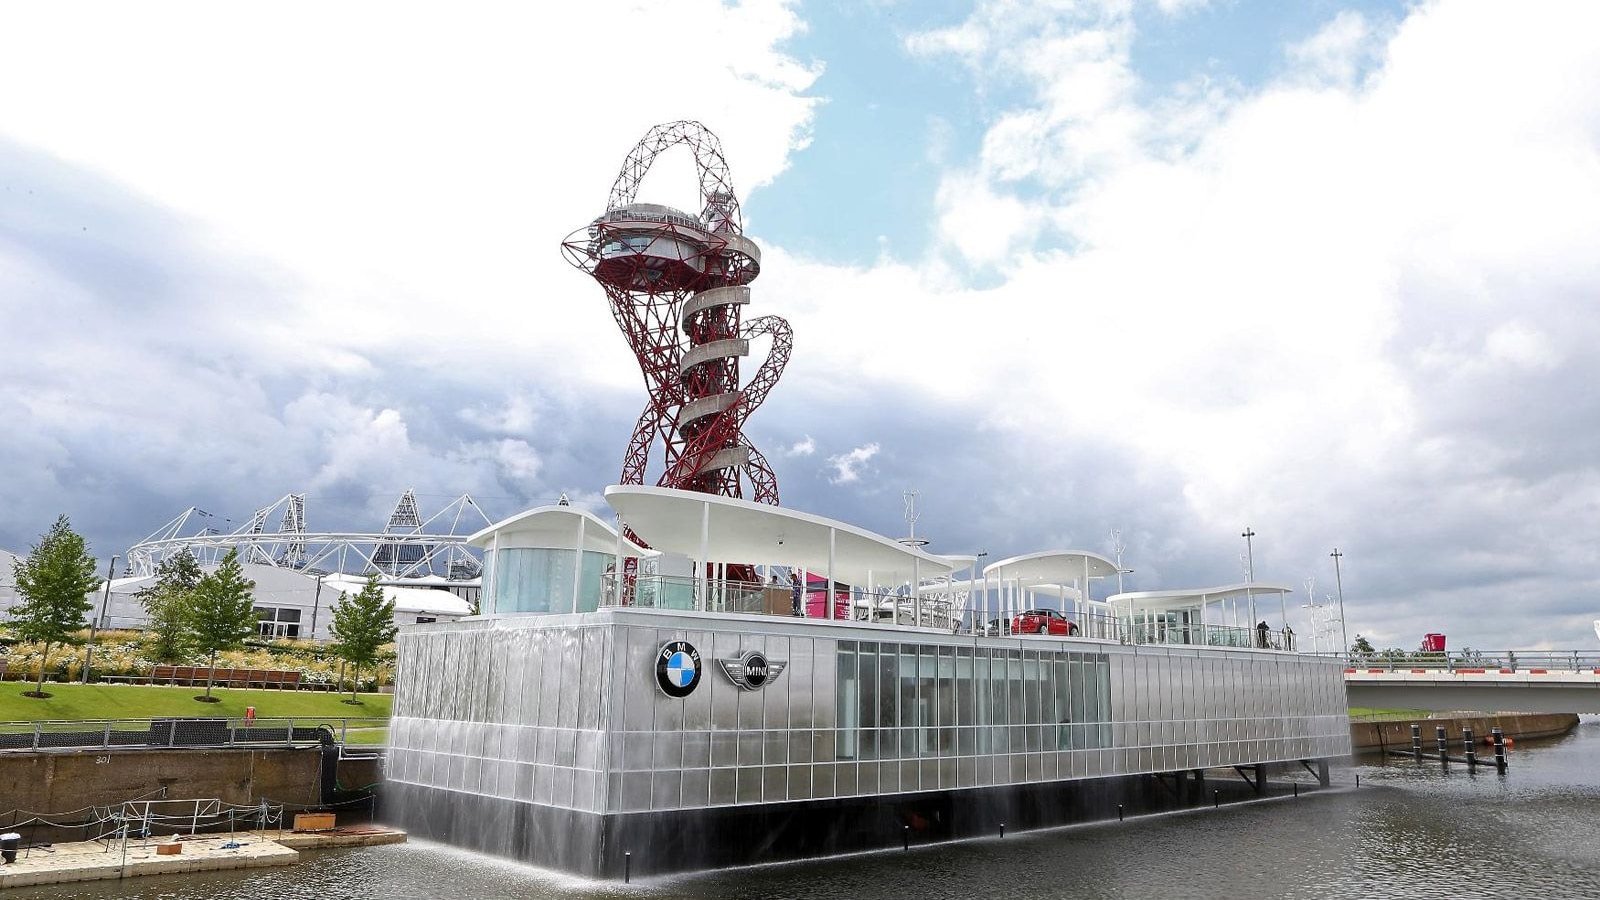 BMW’s 2012 London Olympics pavilion